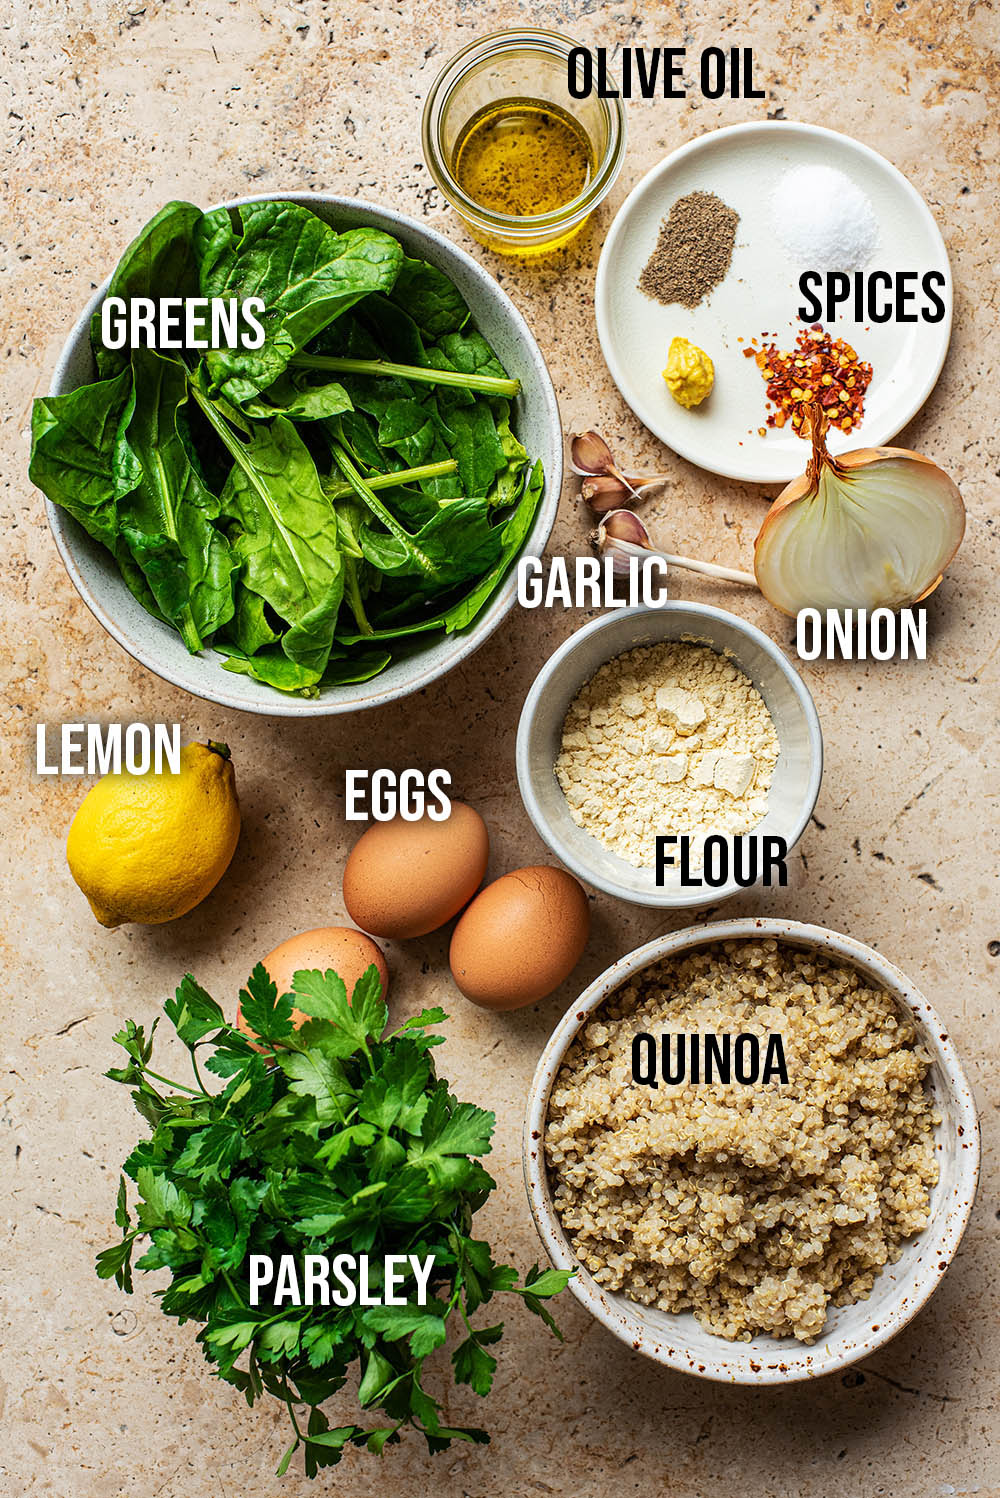 Quinoa and greens patties ingredients.